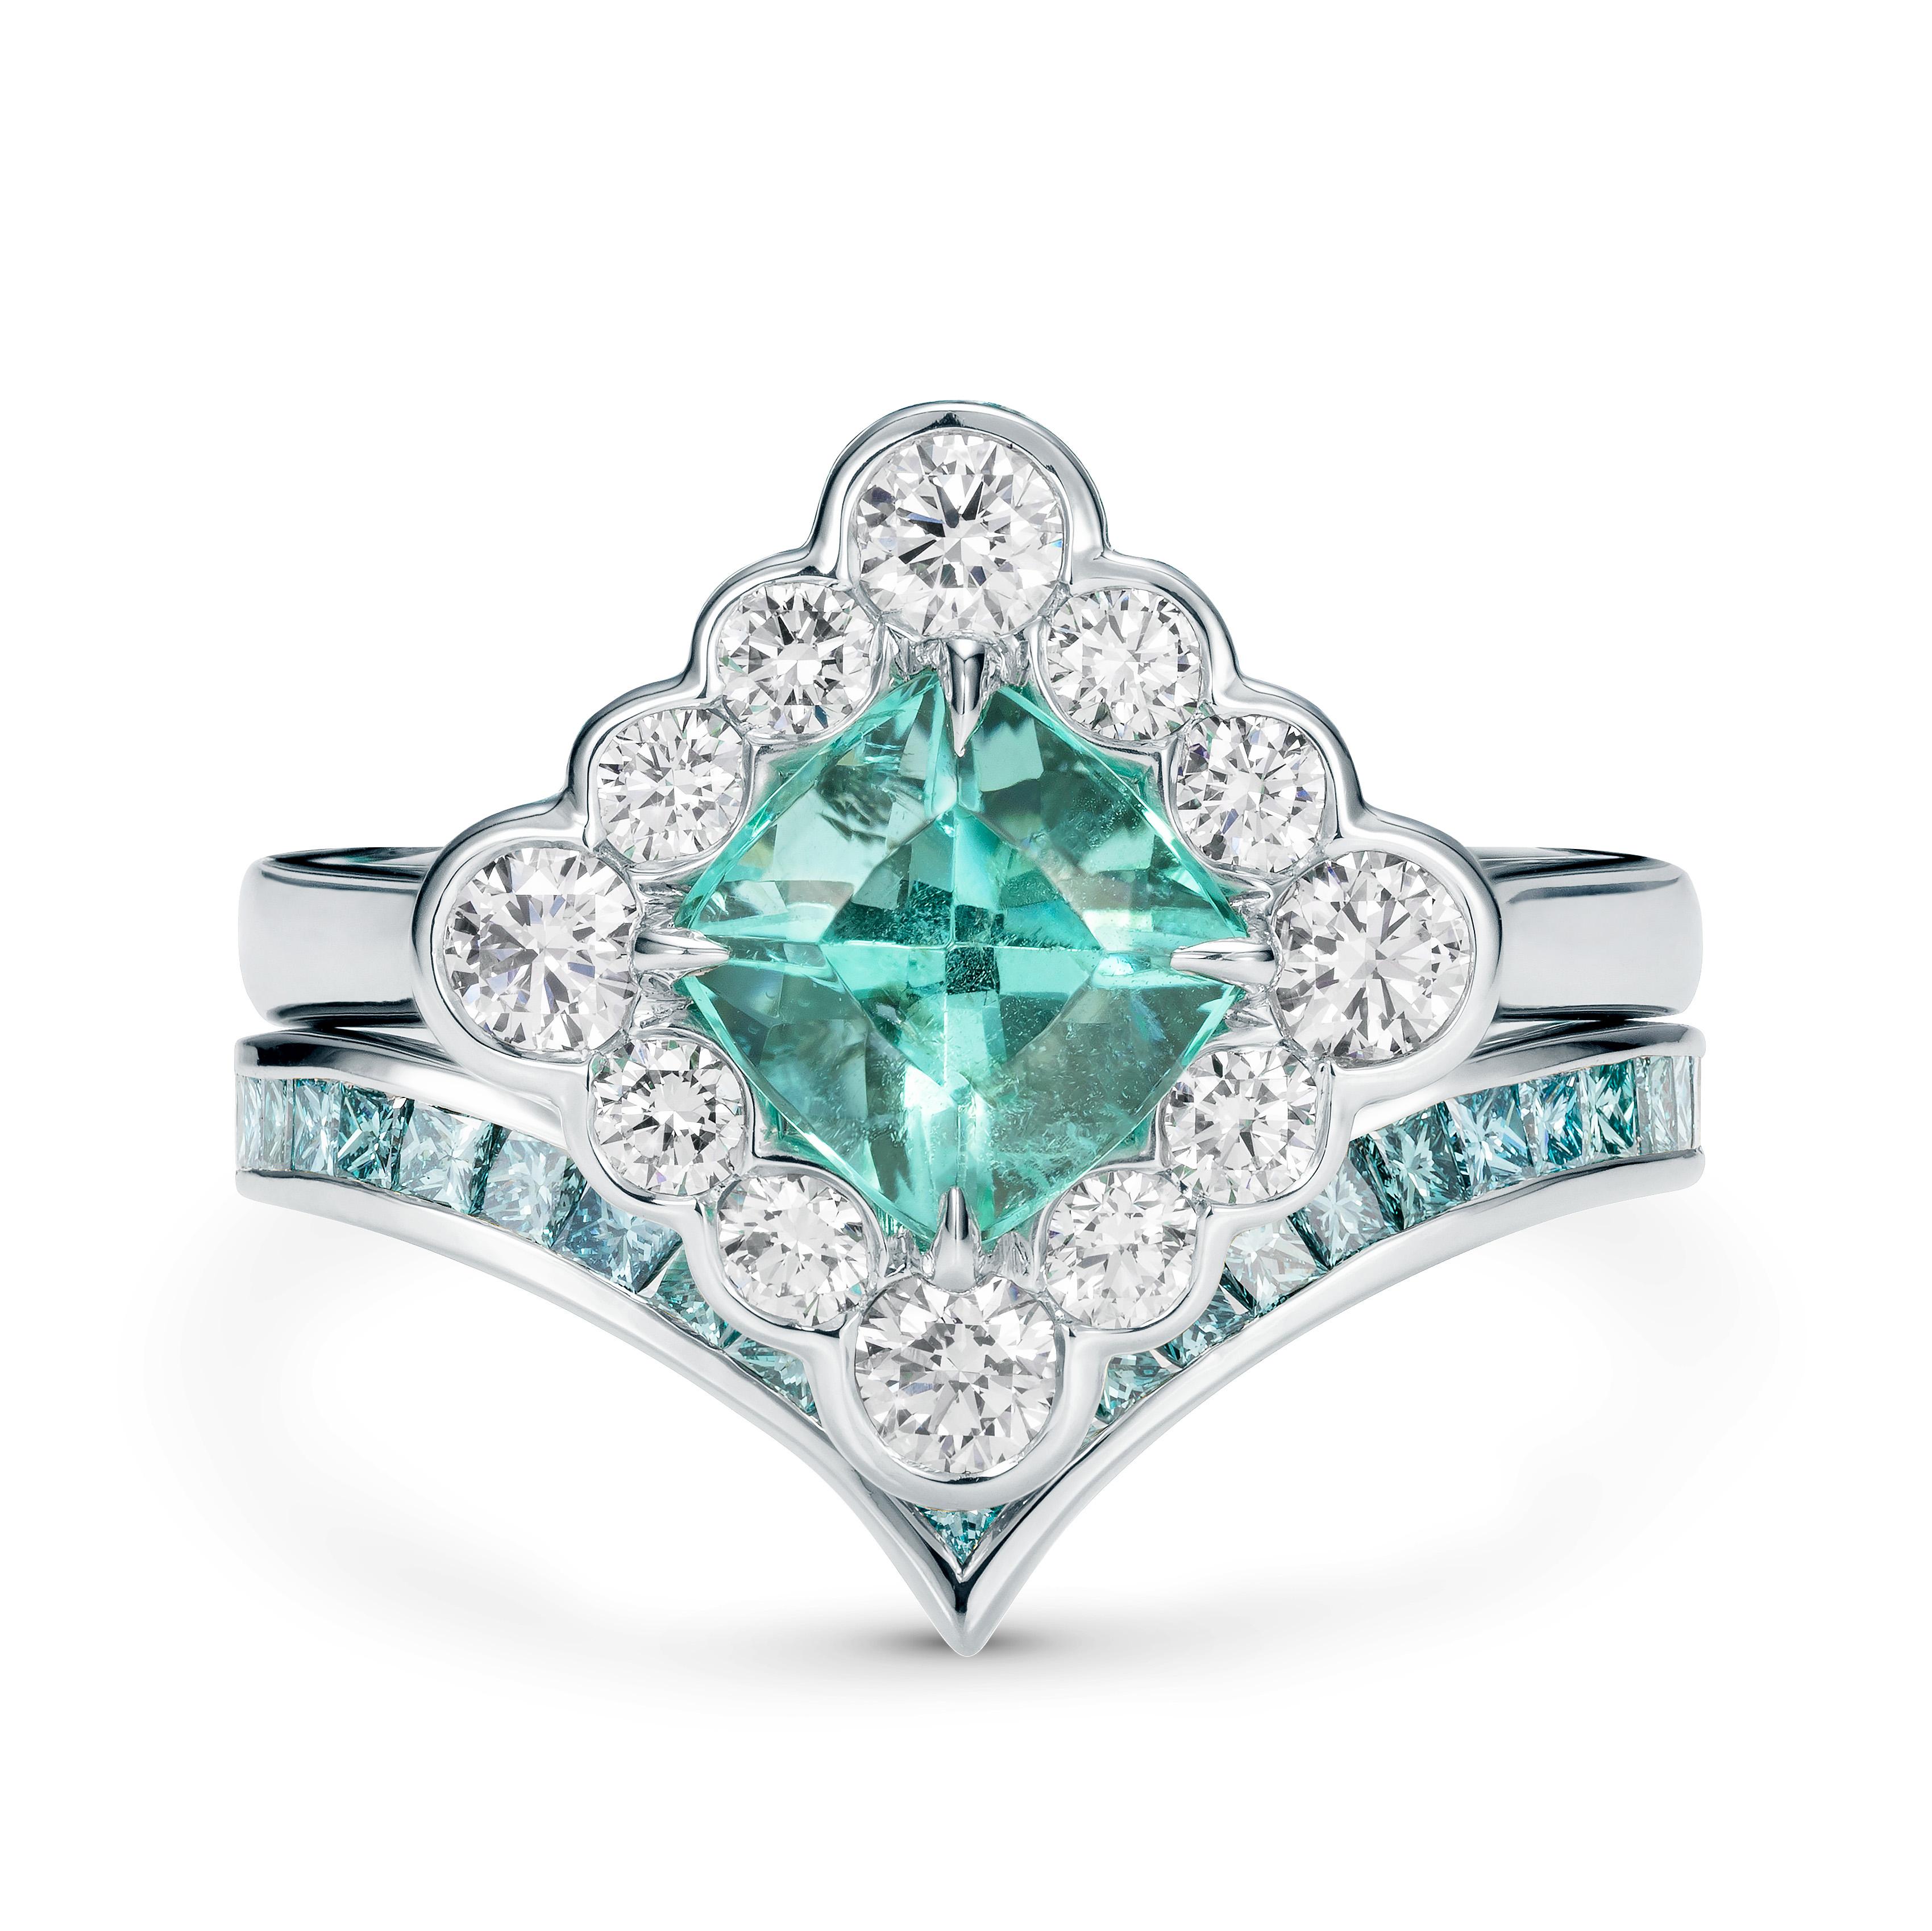 Cushion Cut Marcel Salloum 1.05 Carat Paraiba Tourmaline Diamond Engagement Ring in Platinum For Sale